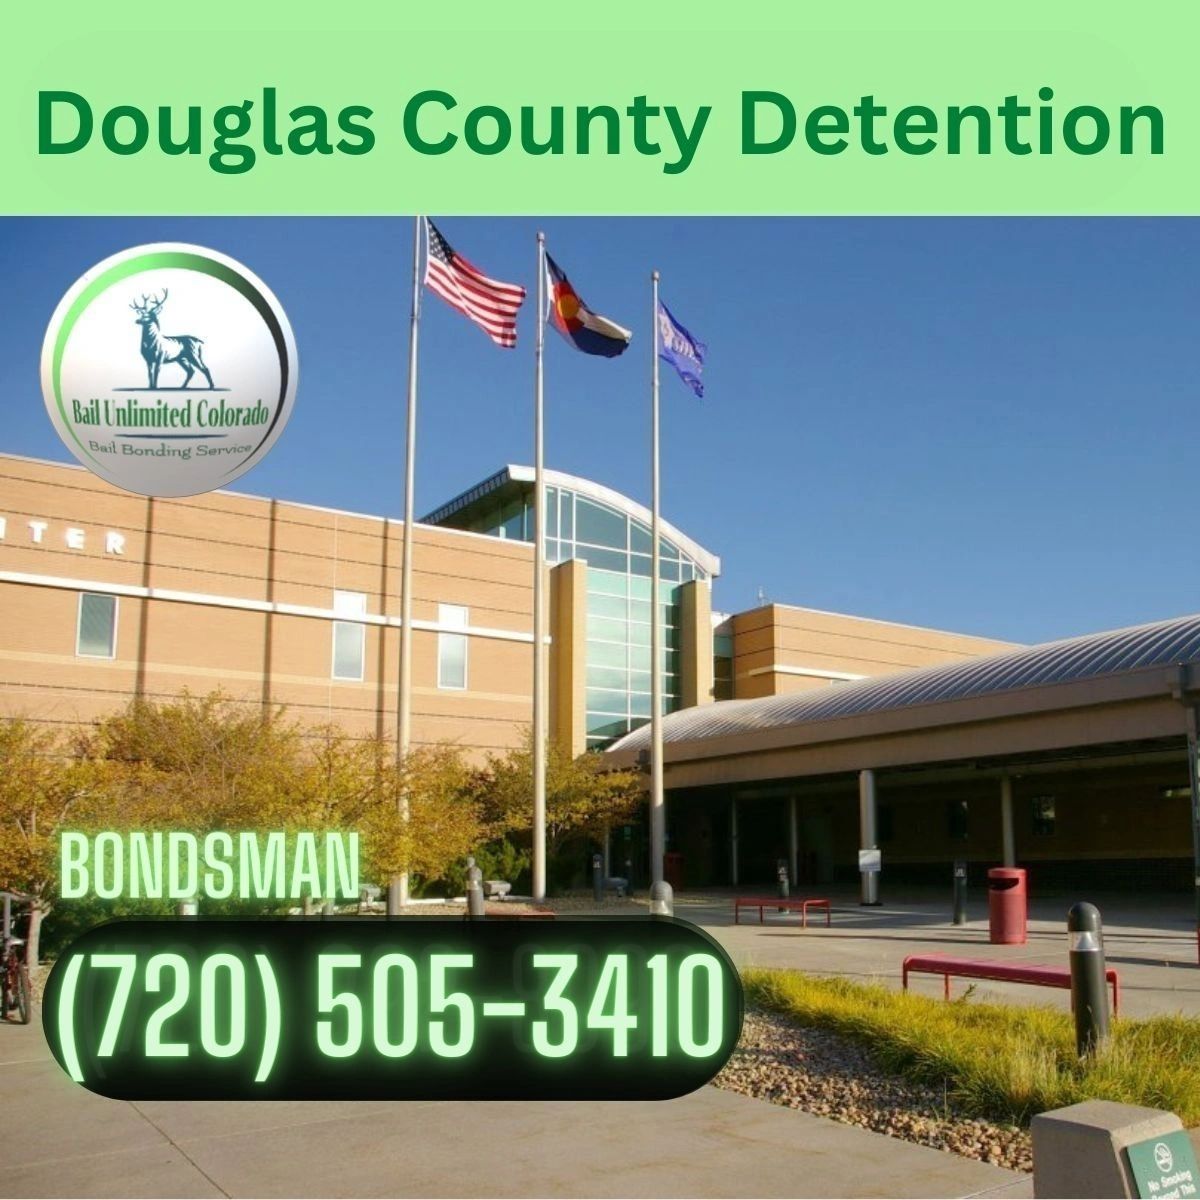 Douglas County Detention Jail Bail Unlimited Colorado (720) 505-3410 Bondsman. Bail Bonding Service